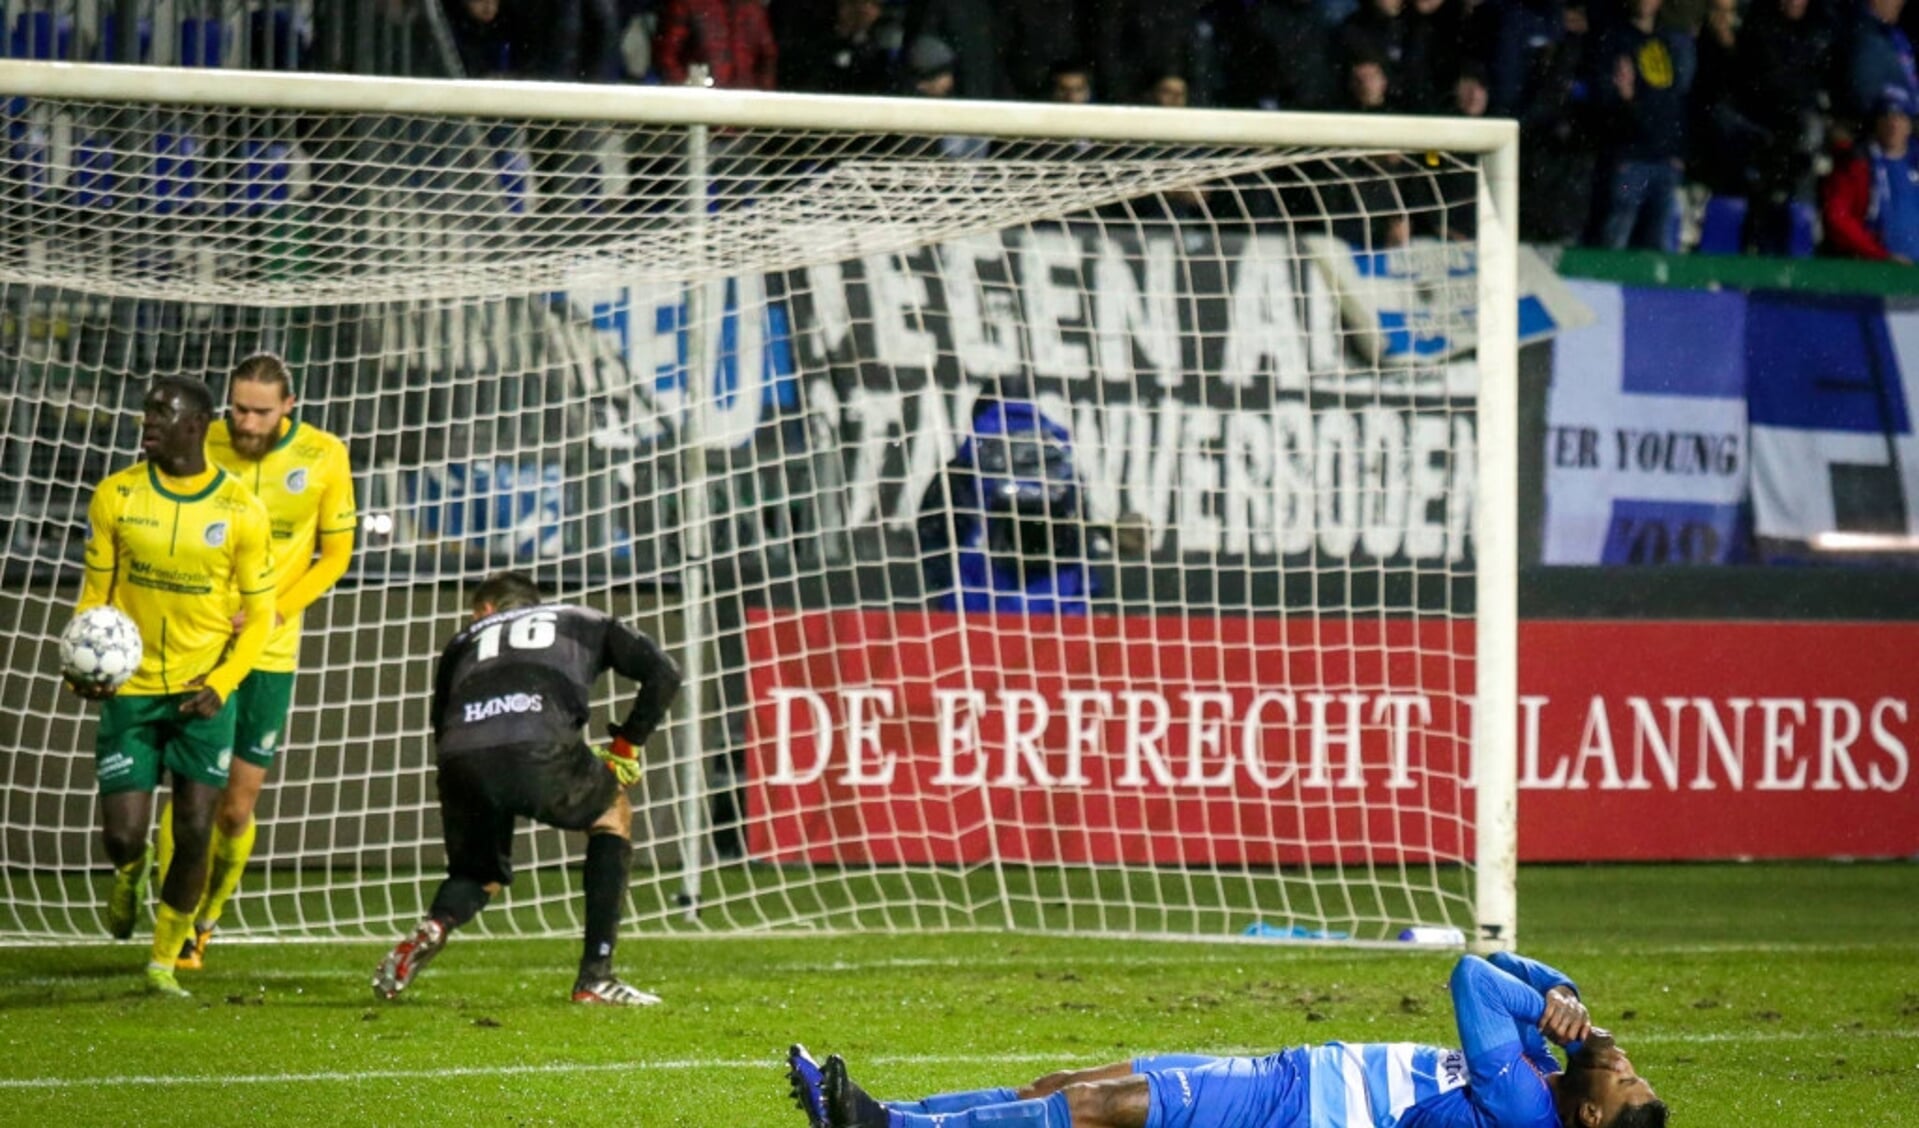 Kansloos verlies voor PEC Zwolle in KNVB Beker